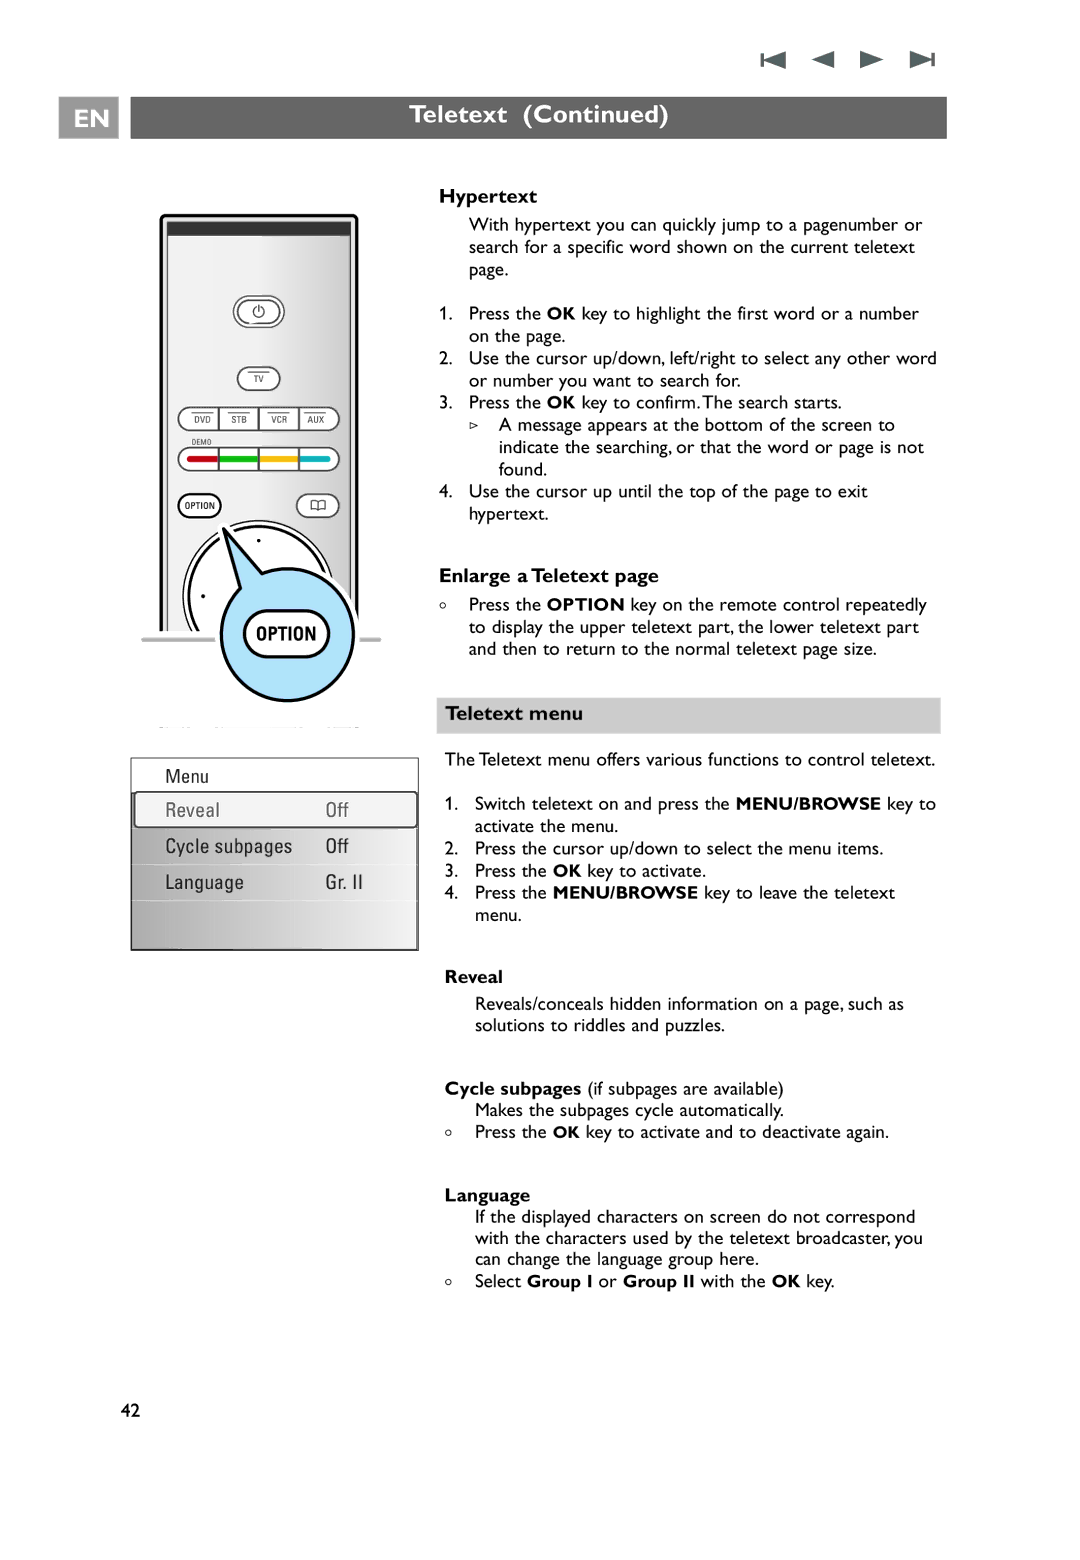 Philips 42PF9641D/10, 42PF9631D/10, 37PF9631D/10 user manual Hypertext, Enlarge a Teletext, Teletext menu, Reveal, Language 